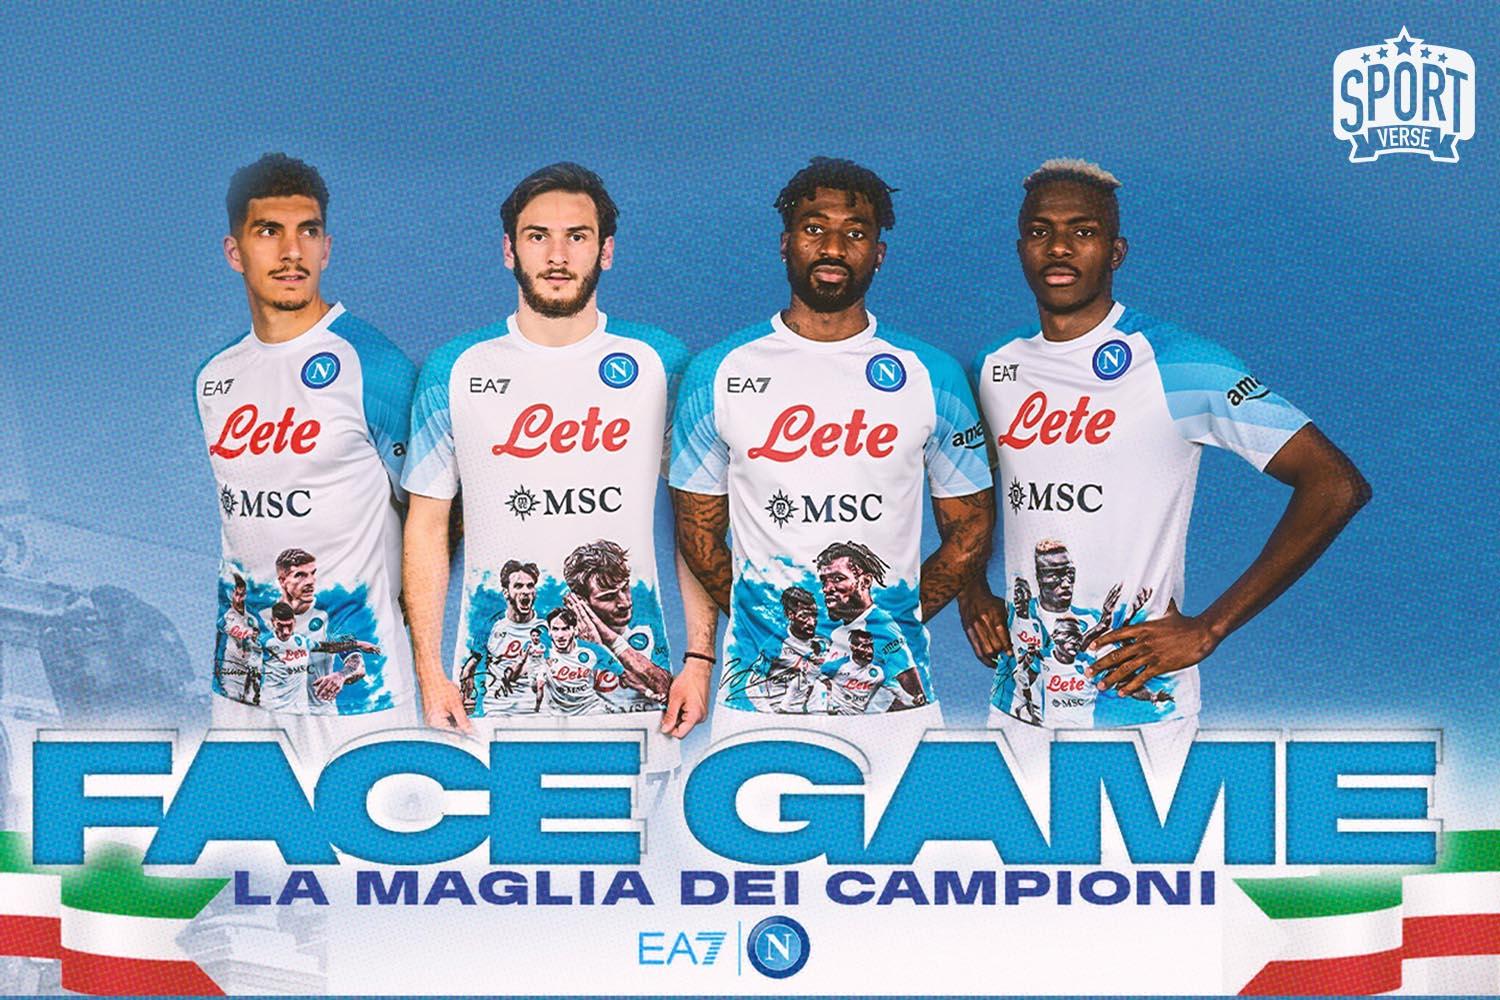 Napoli-face-game-kits-released-SPACEBAR-Hero